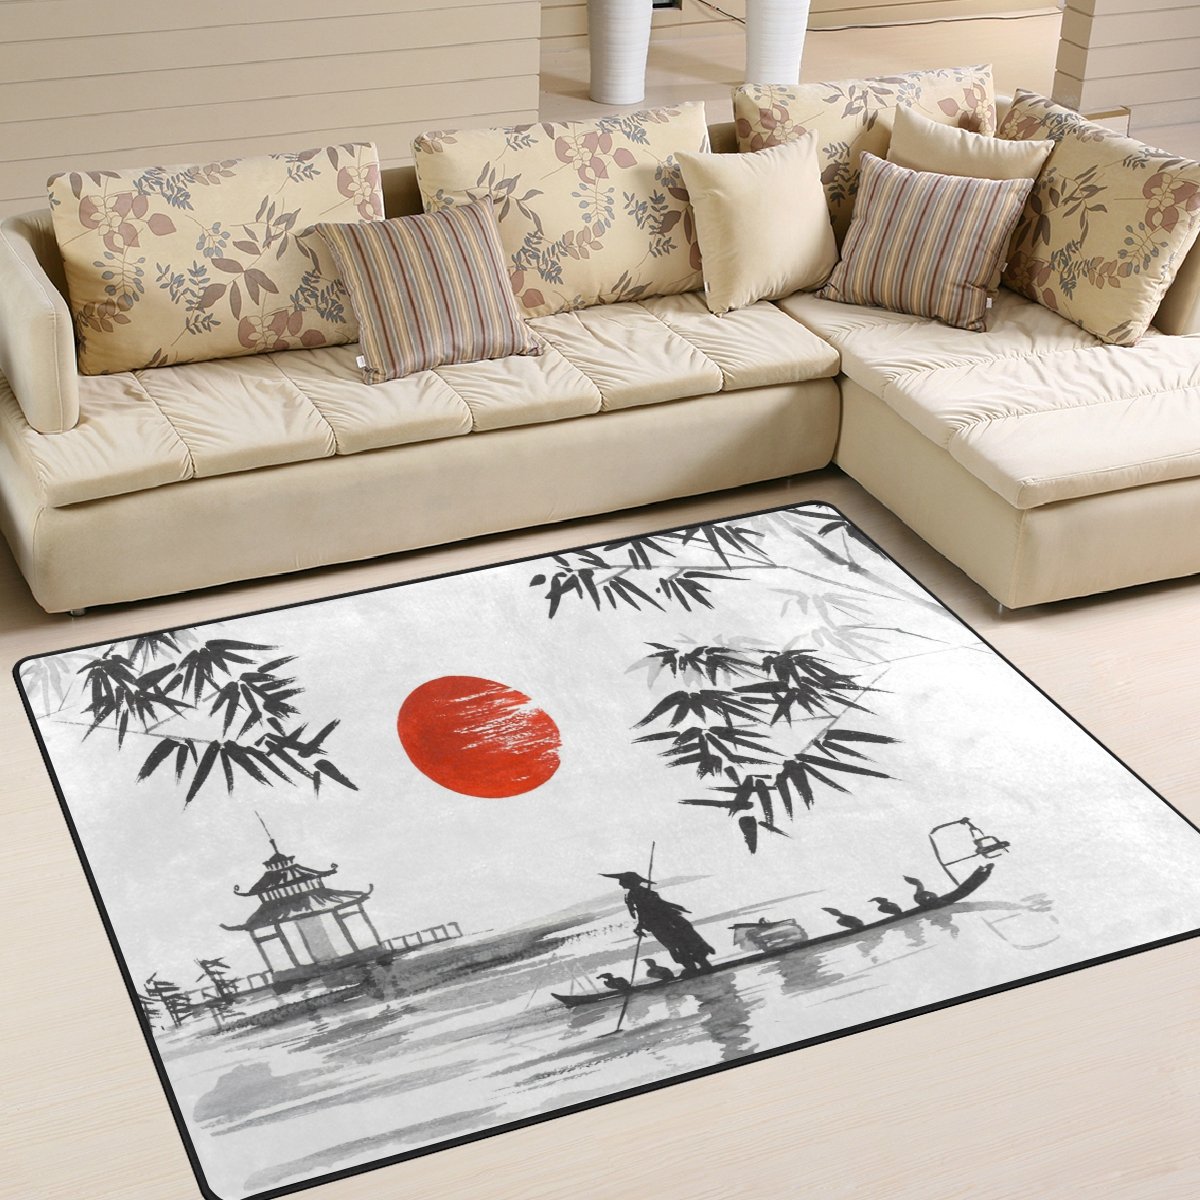 Use7 Traditioneller japanischer Teppich, Motiv: Berg, Bambus, Sonne, Landschaft, Natur, Textil, Mehrfarbig, 203cm x 147.3cm(7 x 5 feet)